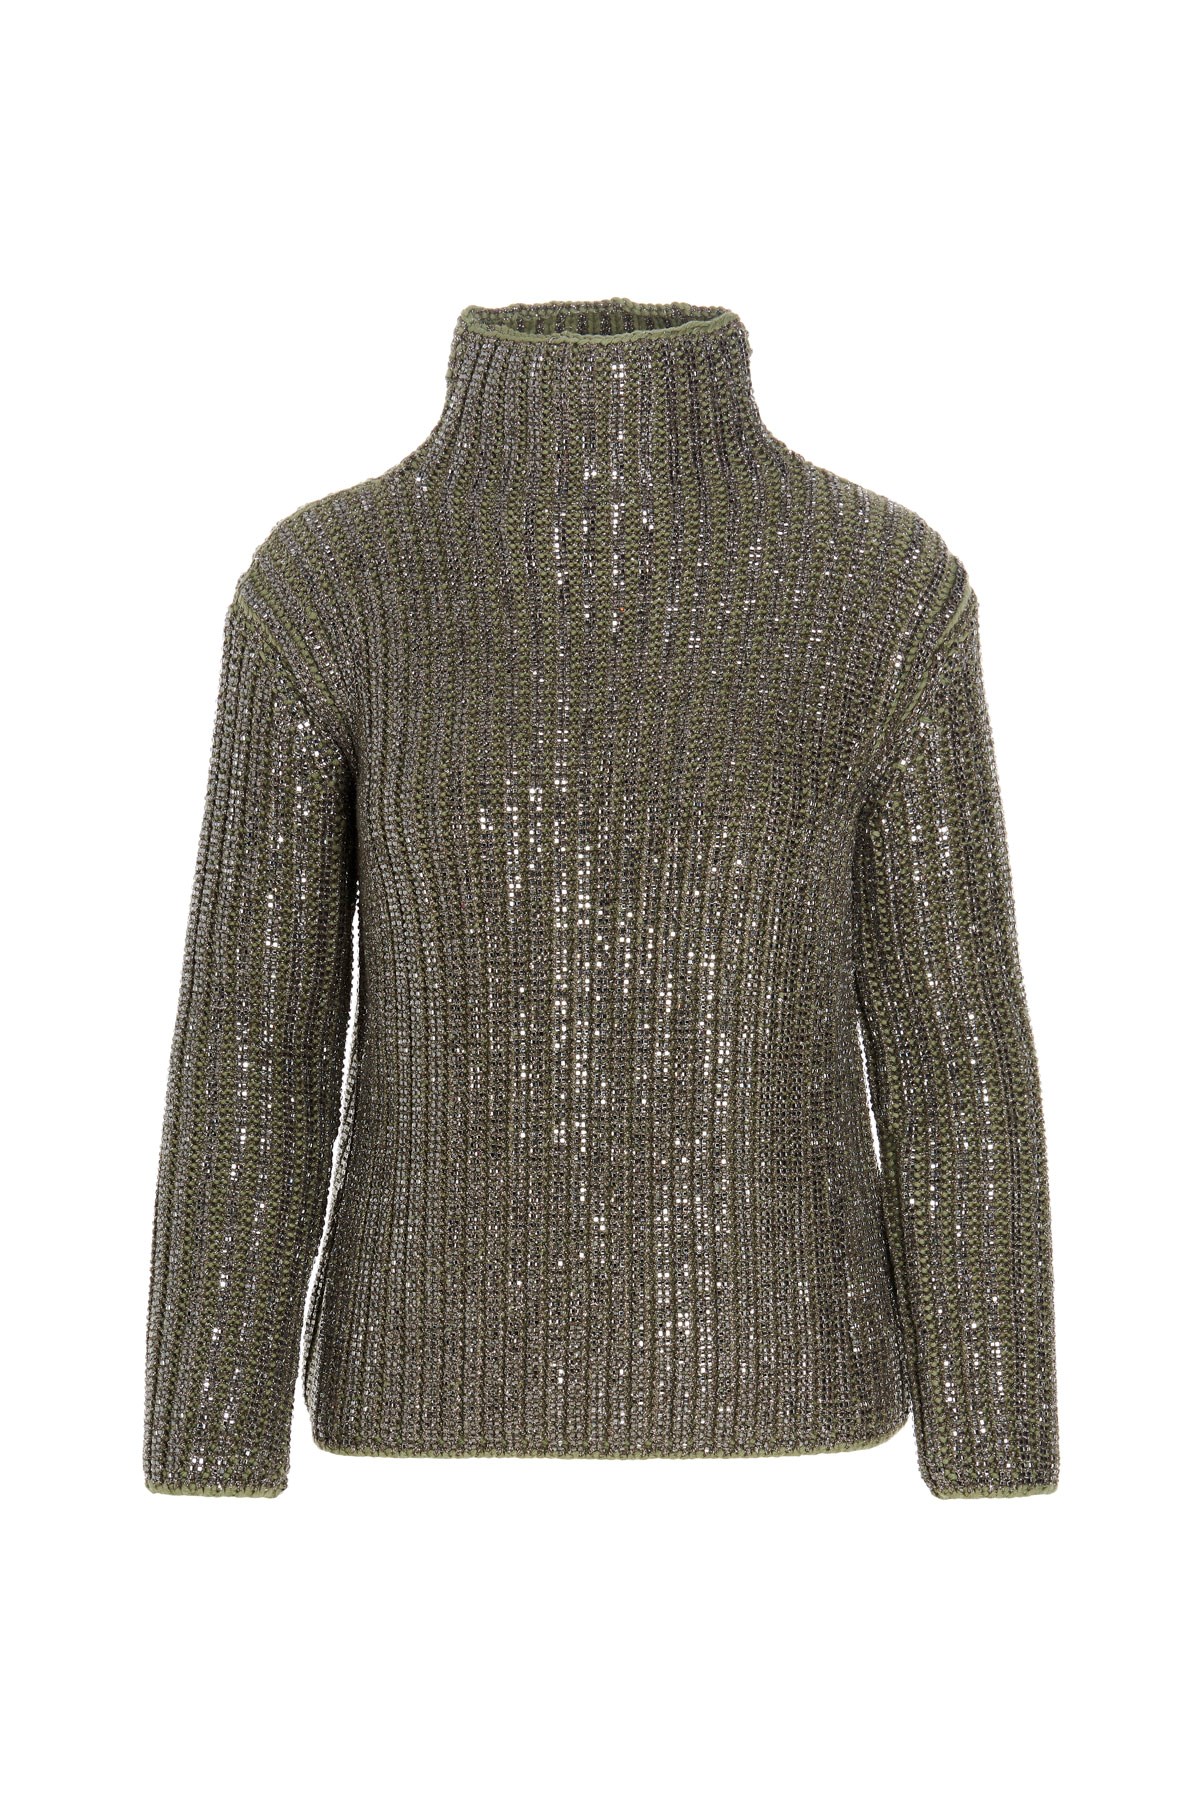 ERMANNO SCERVINO Jewel Appliqué Sweater